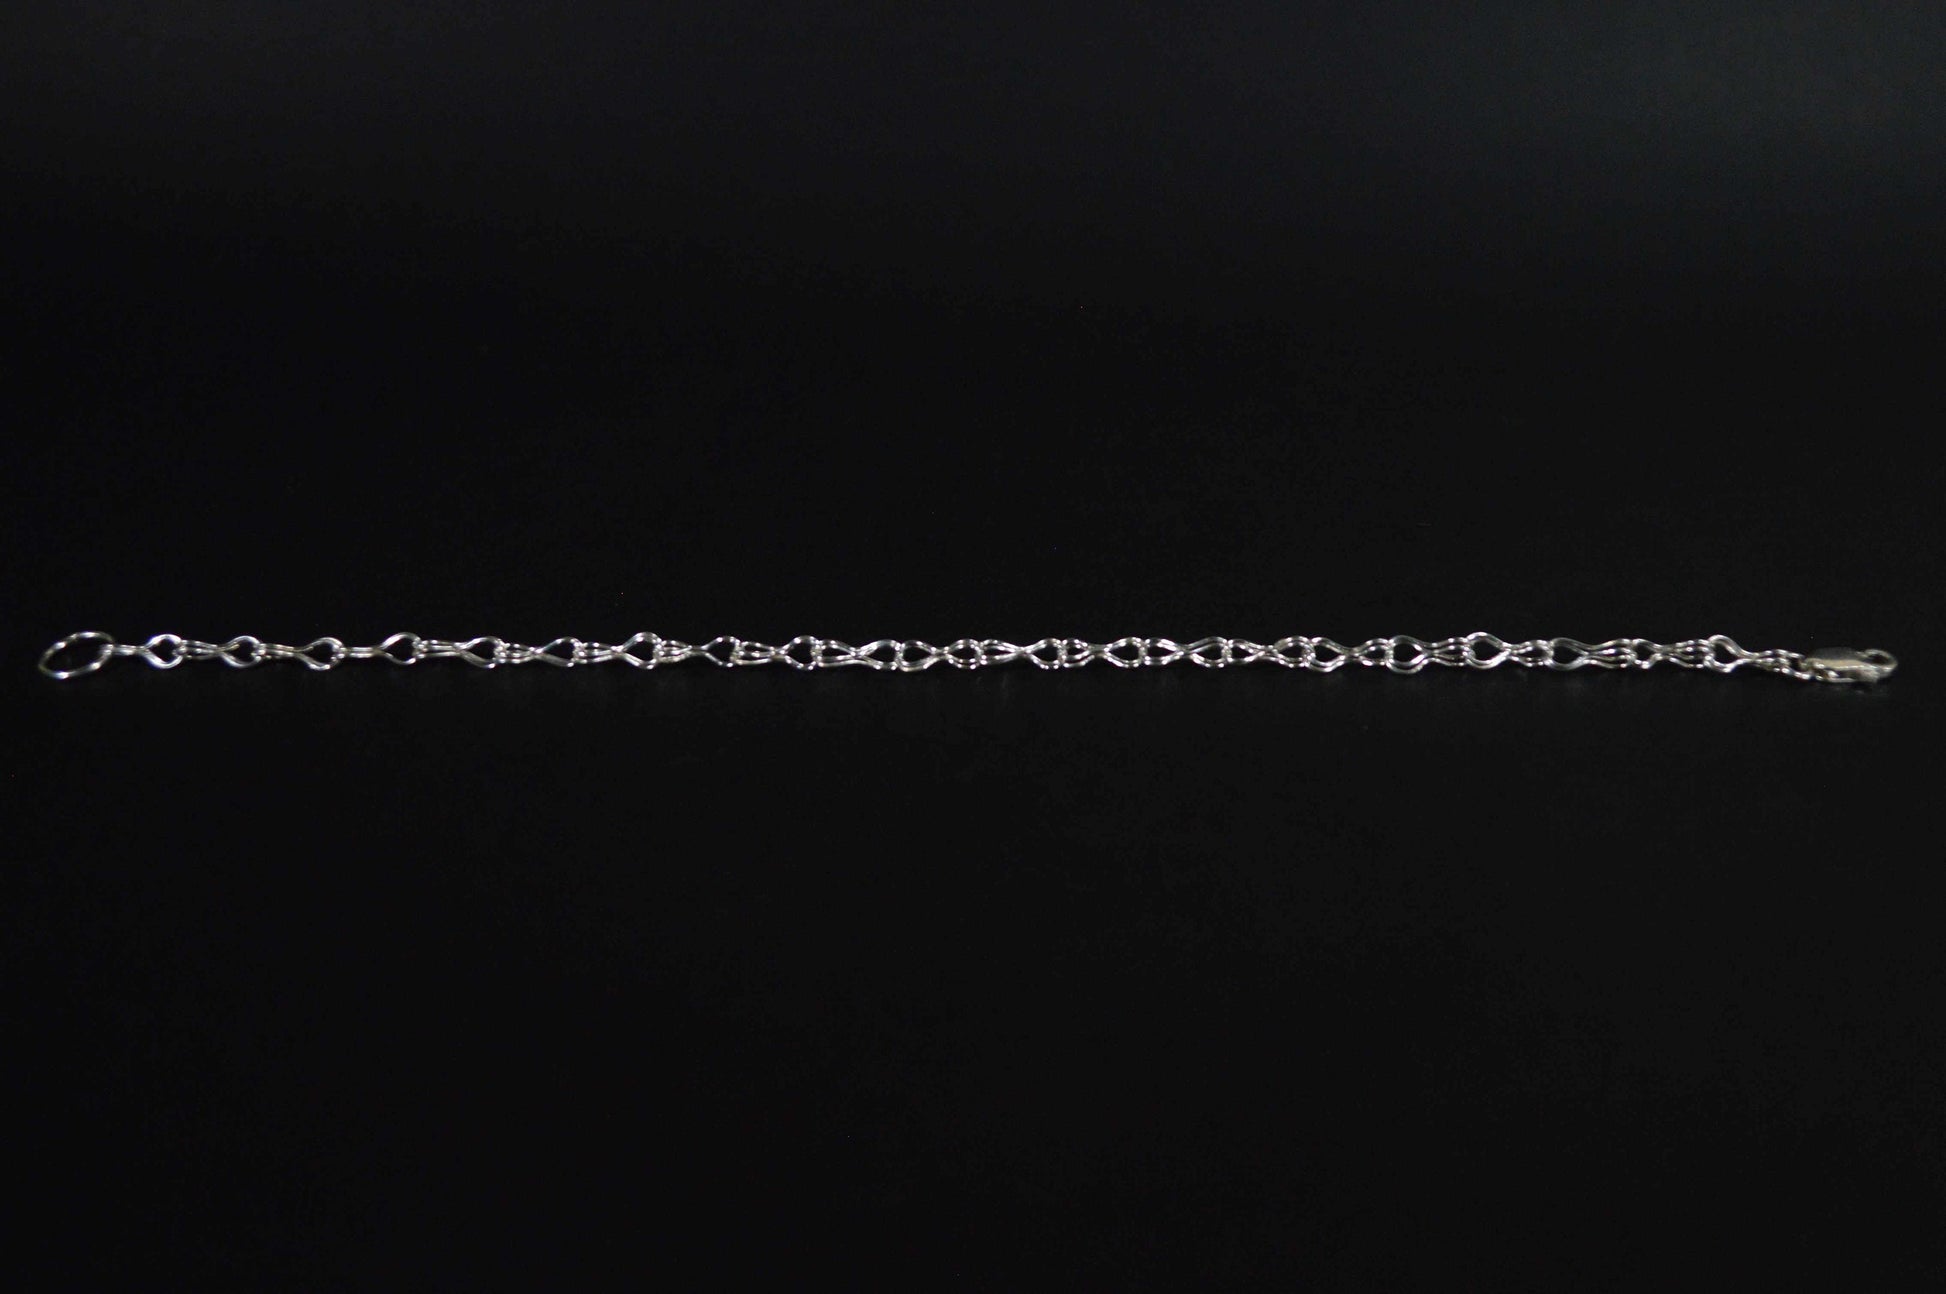 silver chain bracelet